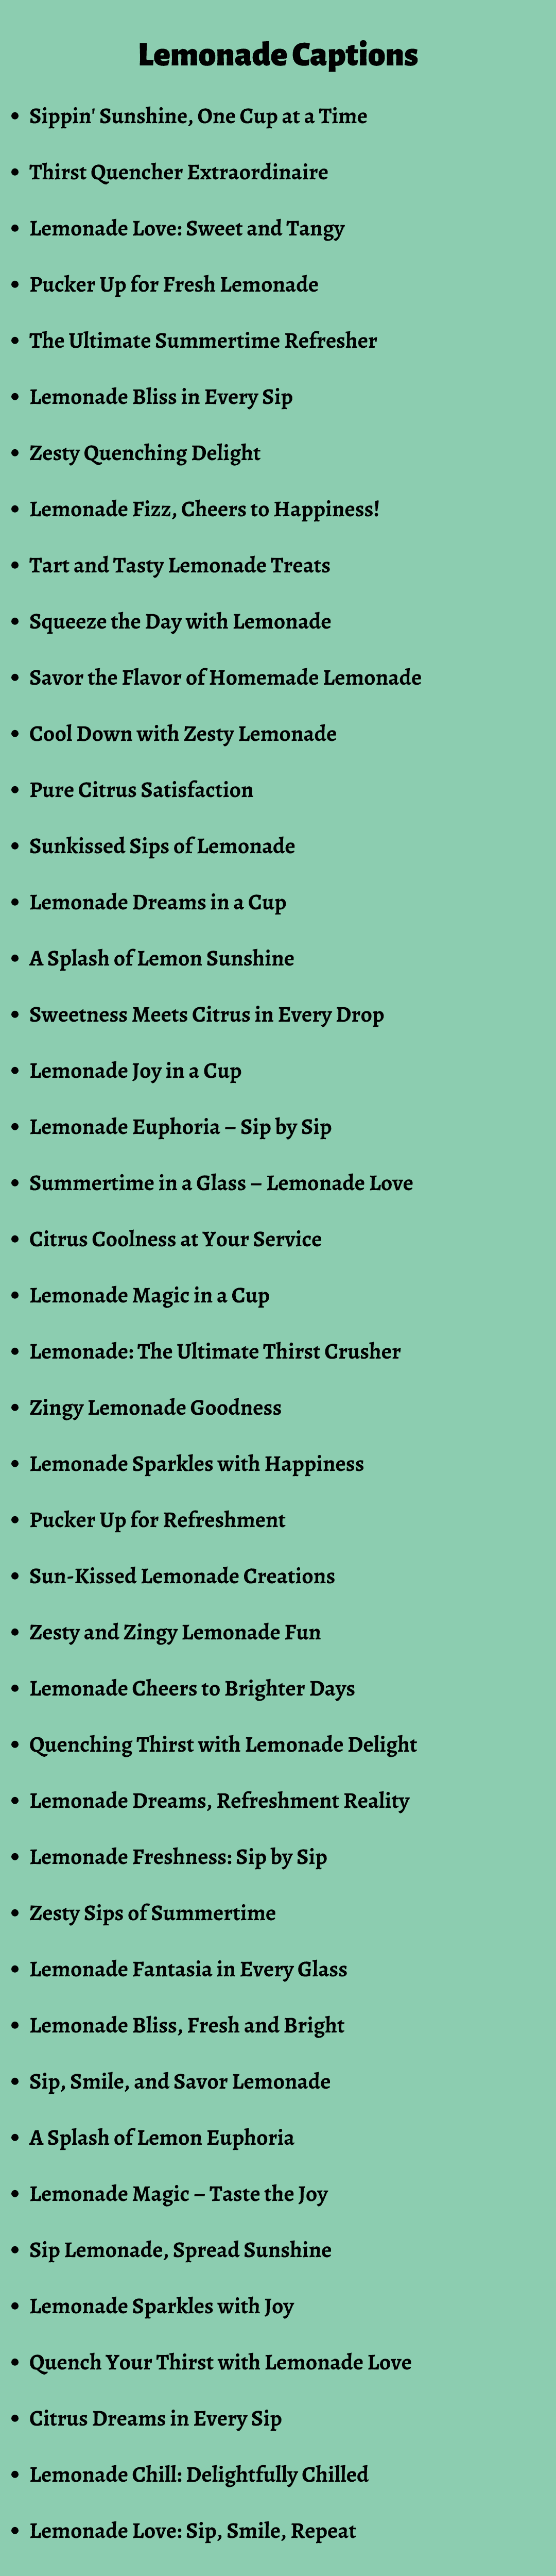 Lemonade Captions